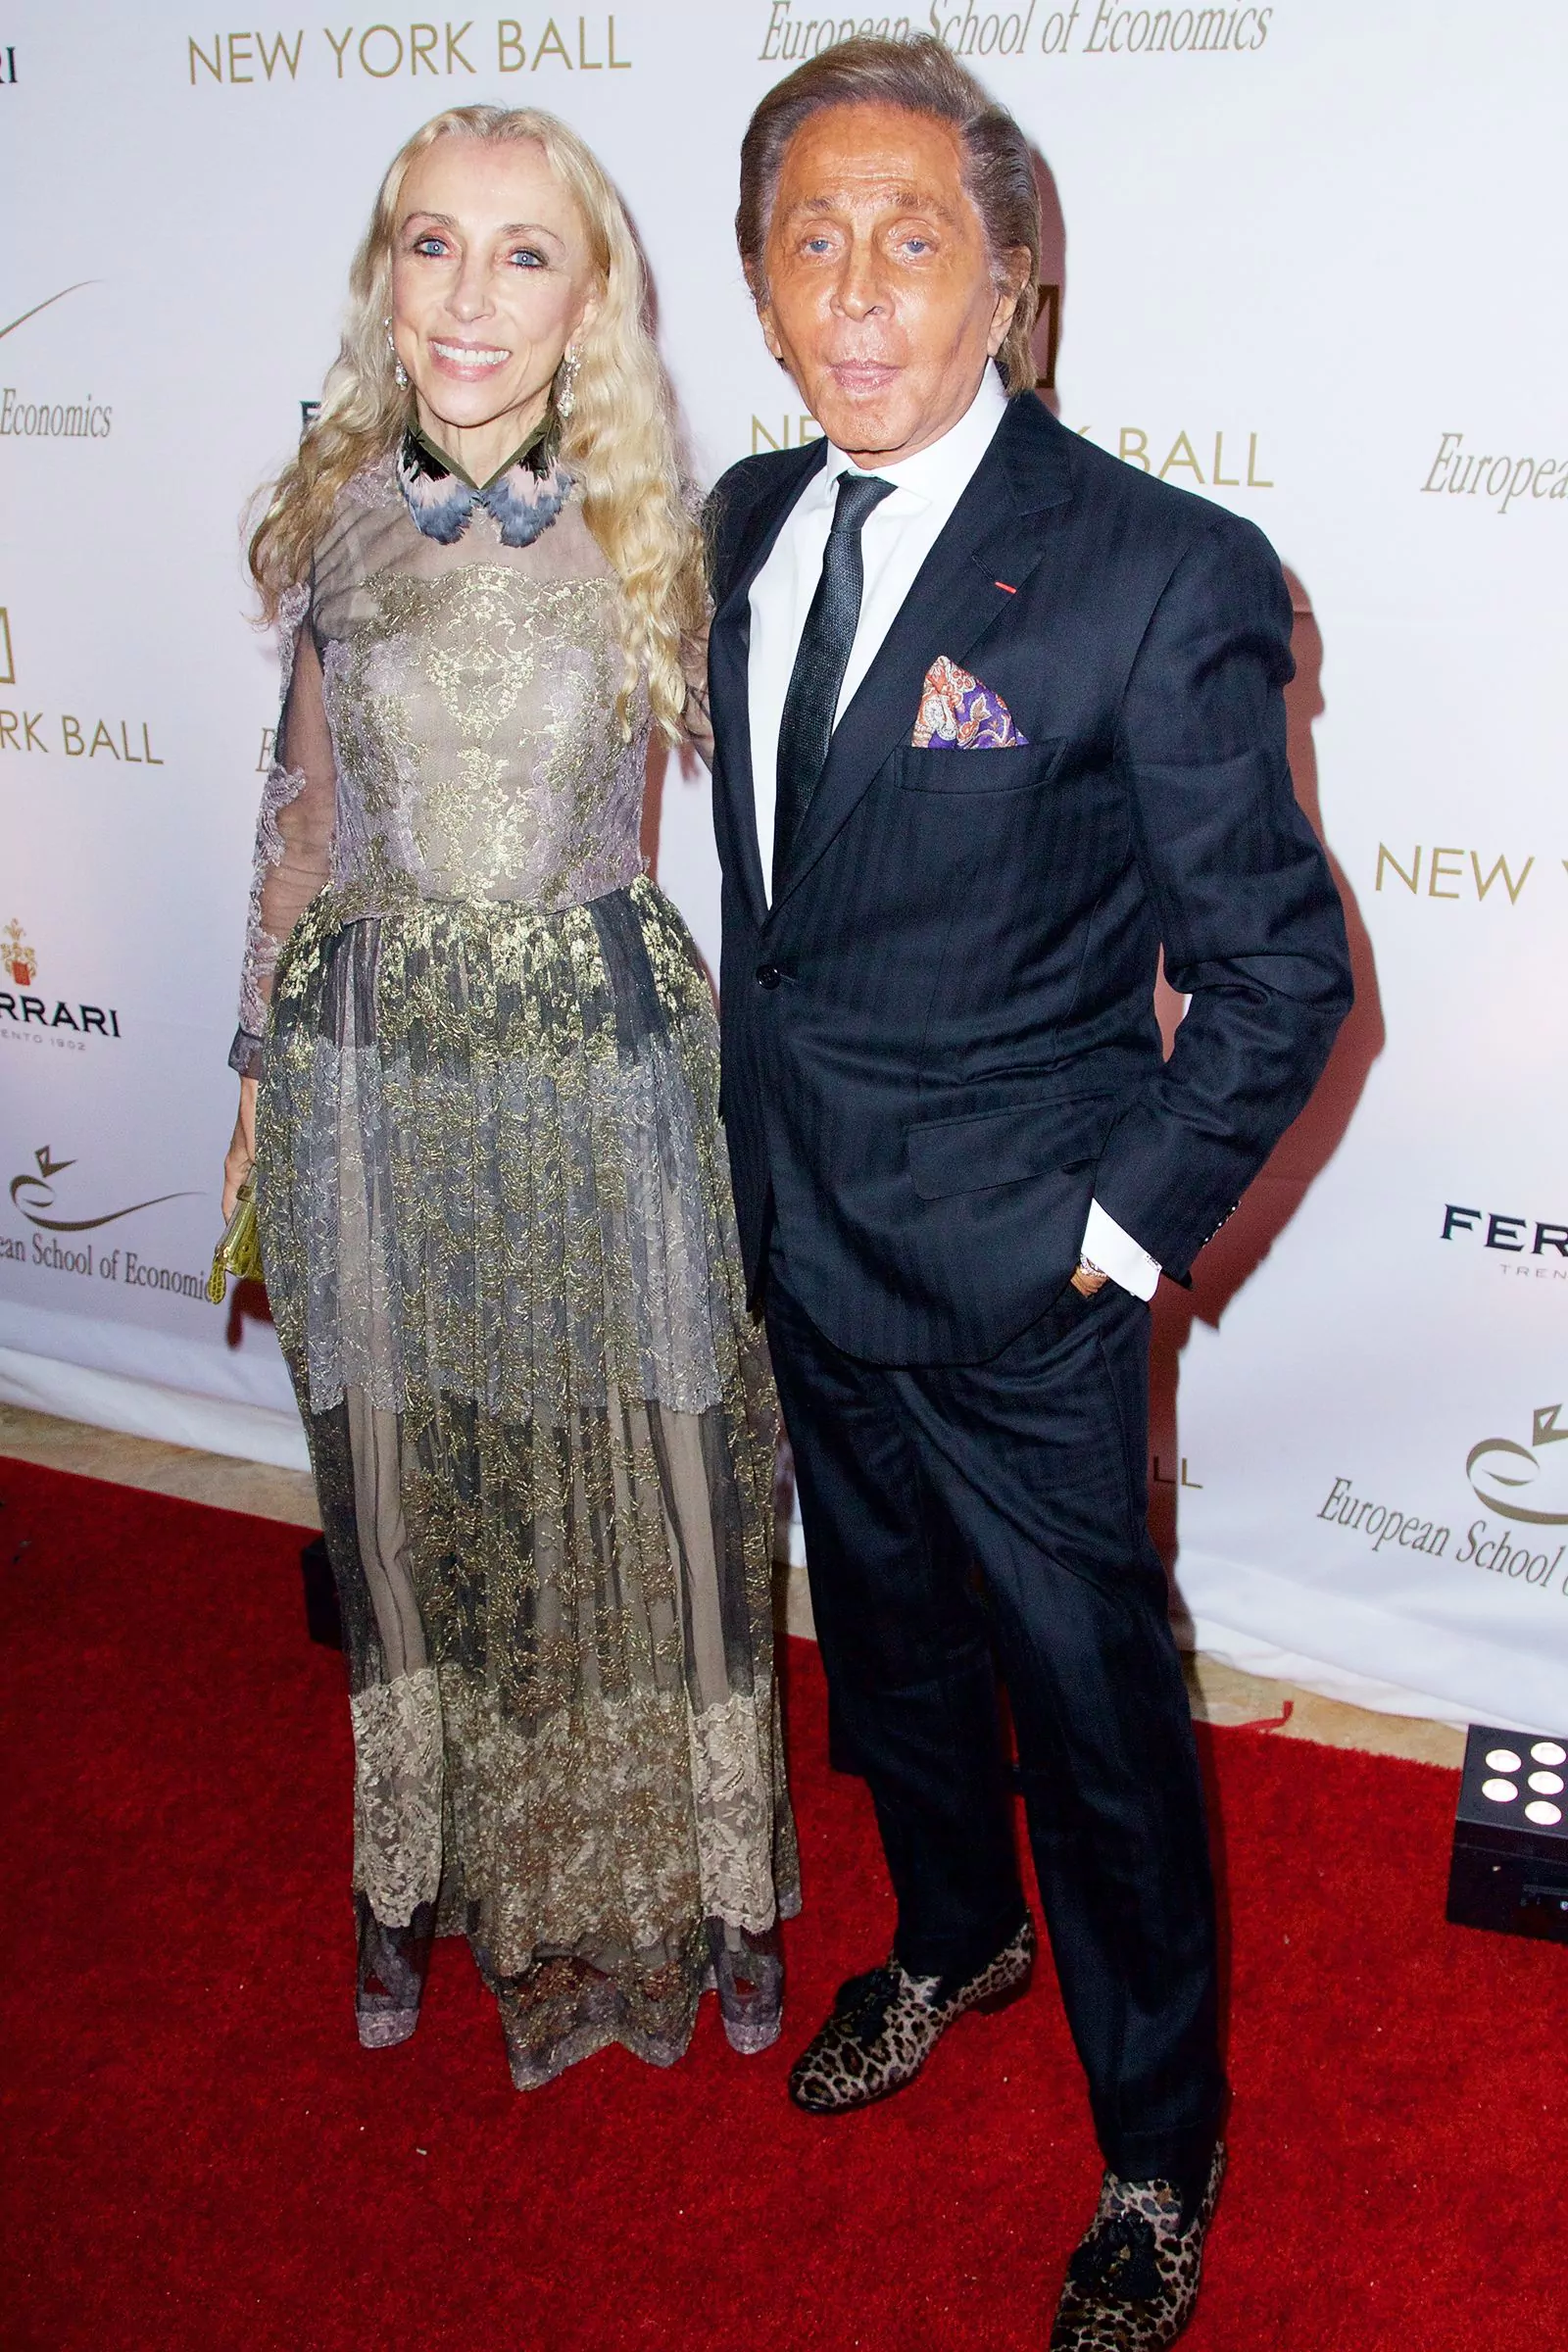 Franca Sozzani and Valentino Garavani at The New York Ball, November 19, 2014